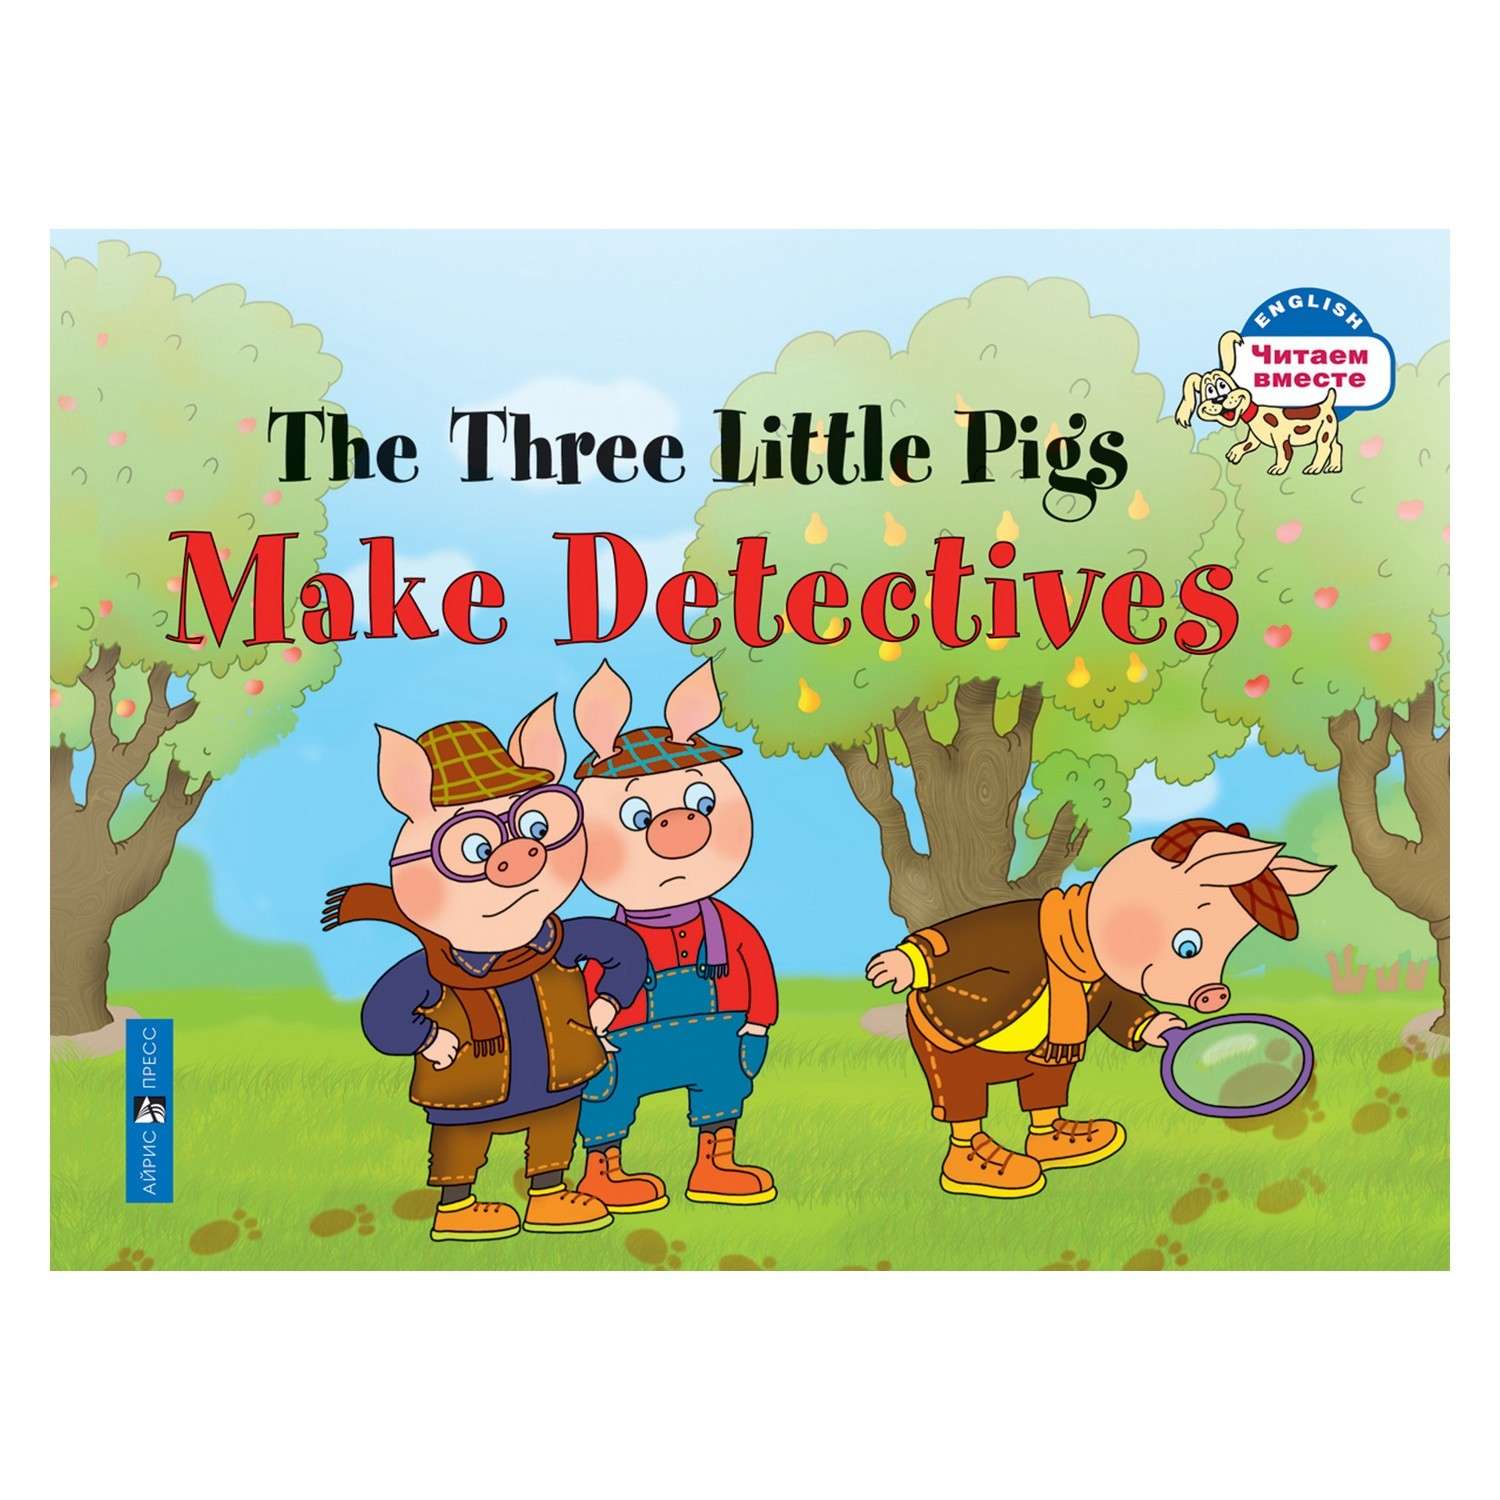 Книга Айрис ПРЕСС Три поросенка становятся детективами. The Three Little Pigs Make Detectives. (на английском языке) - Наумова Н.А. - фото 1